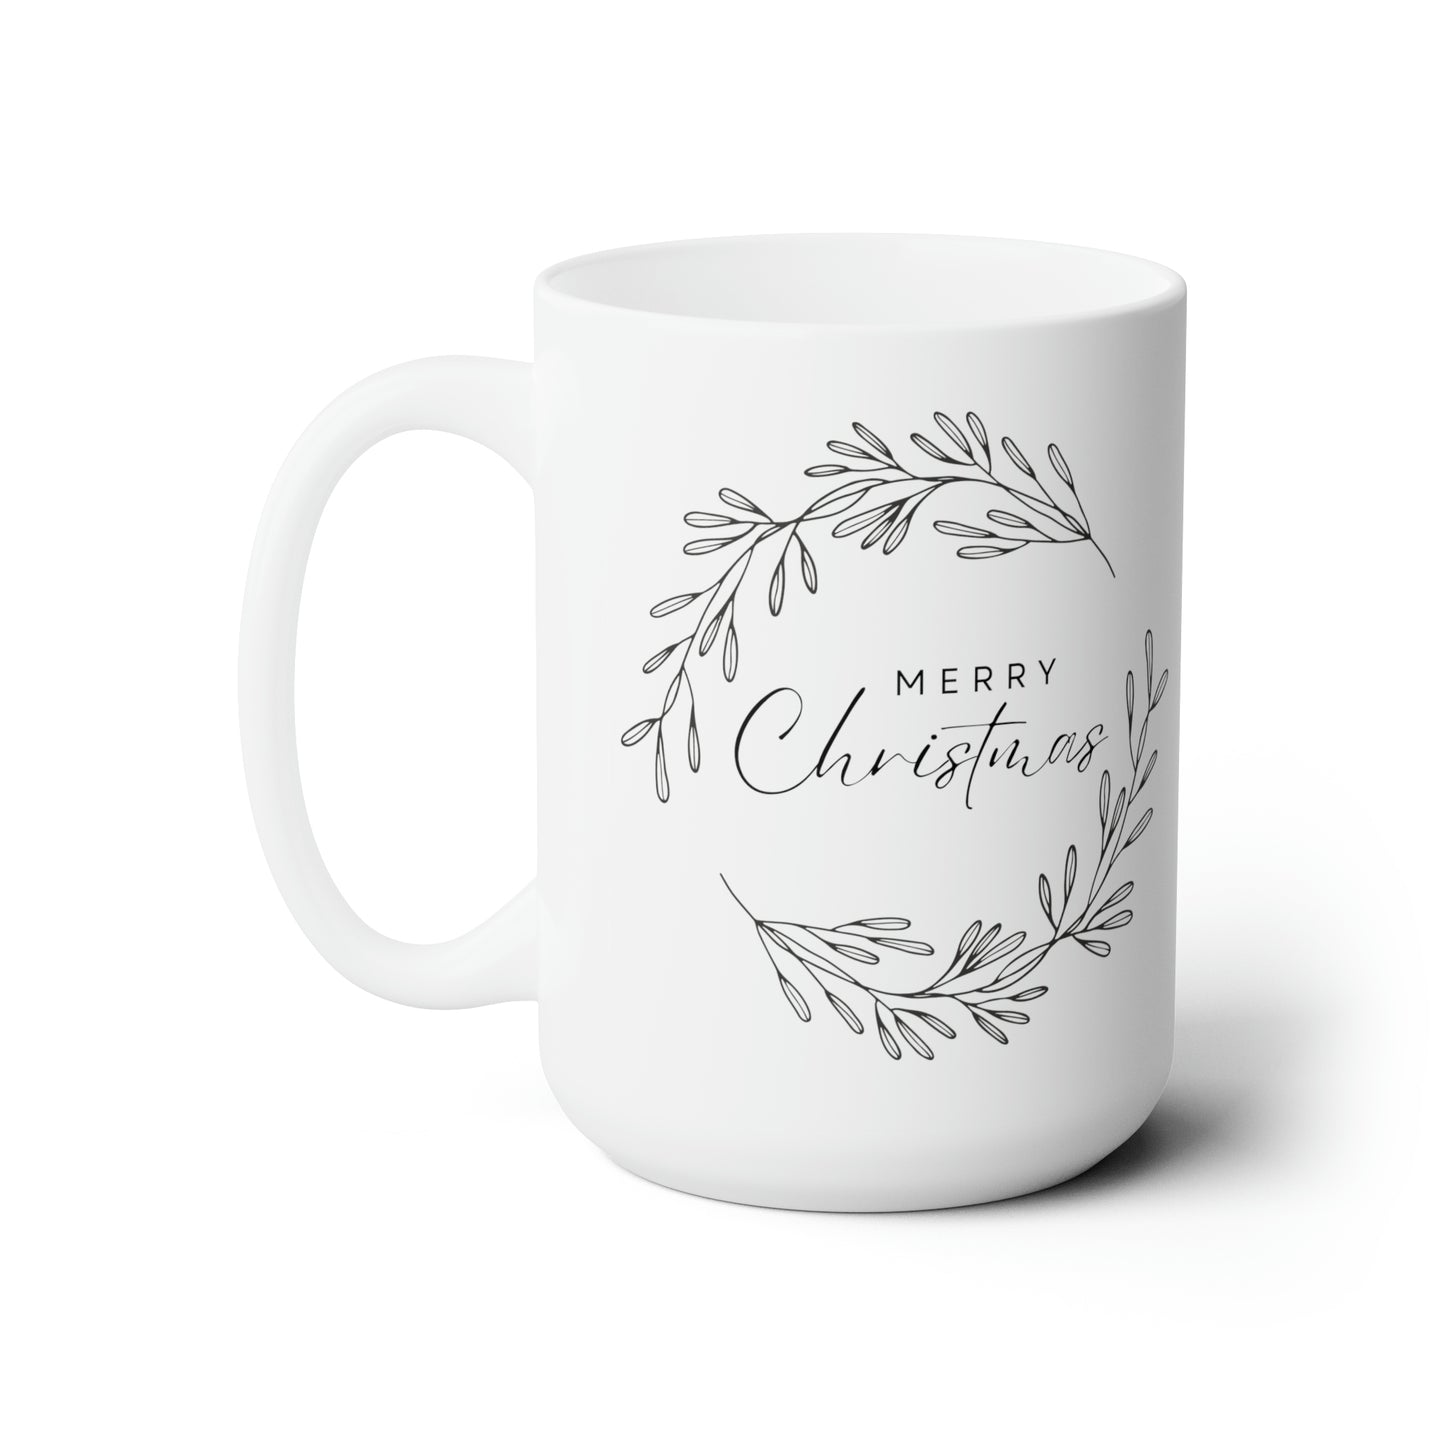 Merry Christmas Printed Ceramic Mug, 15oz, White